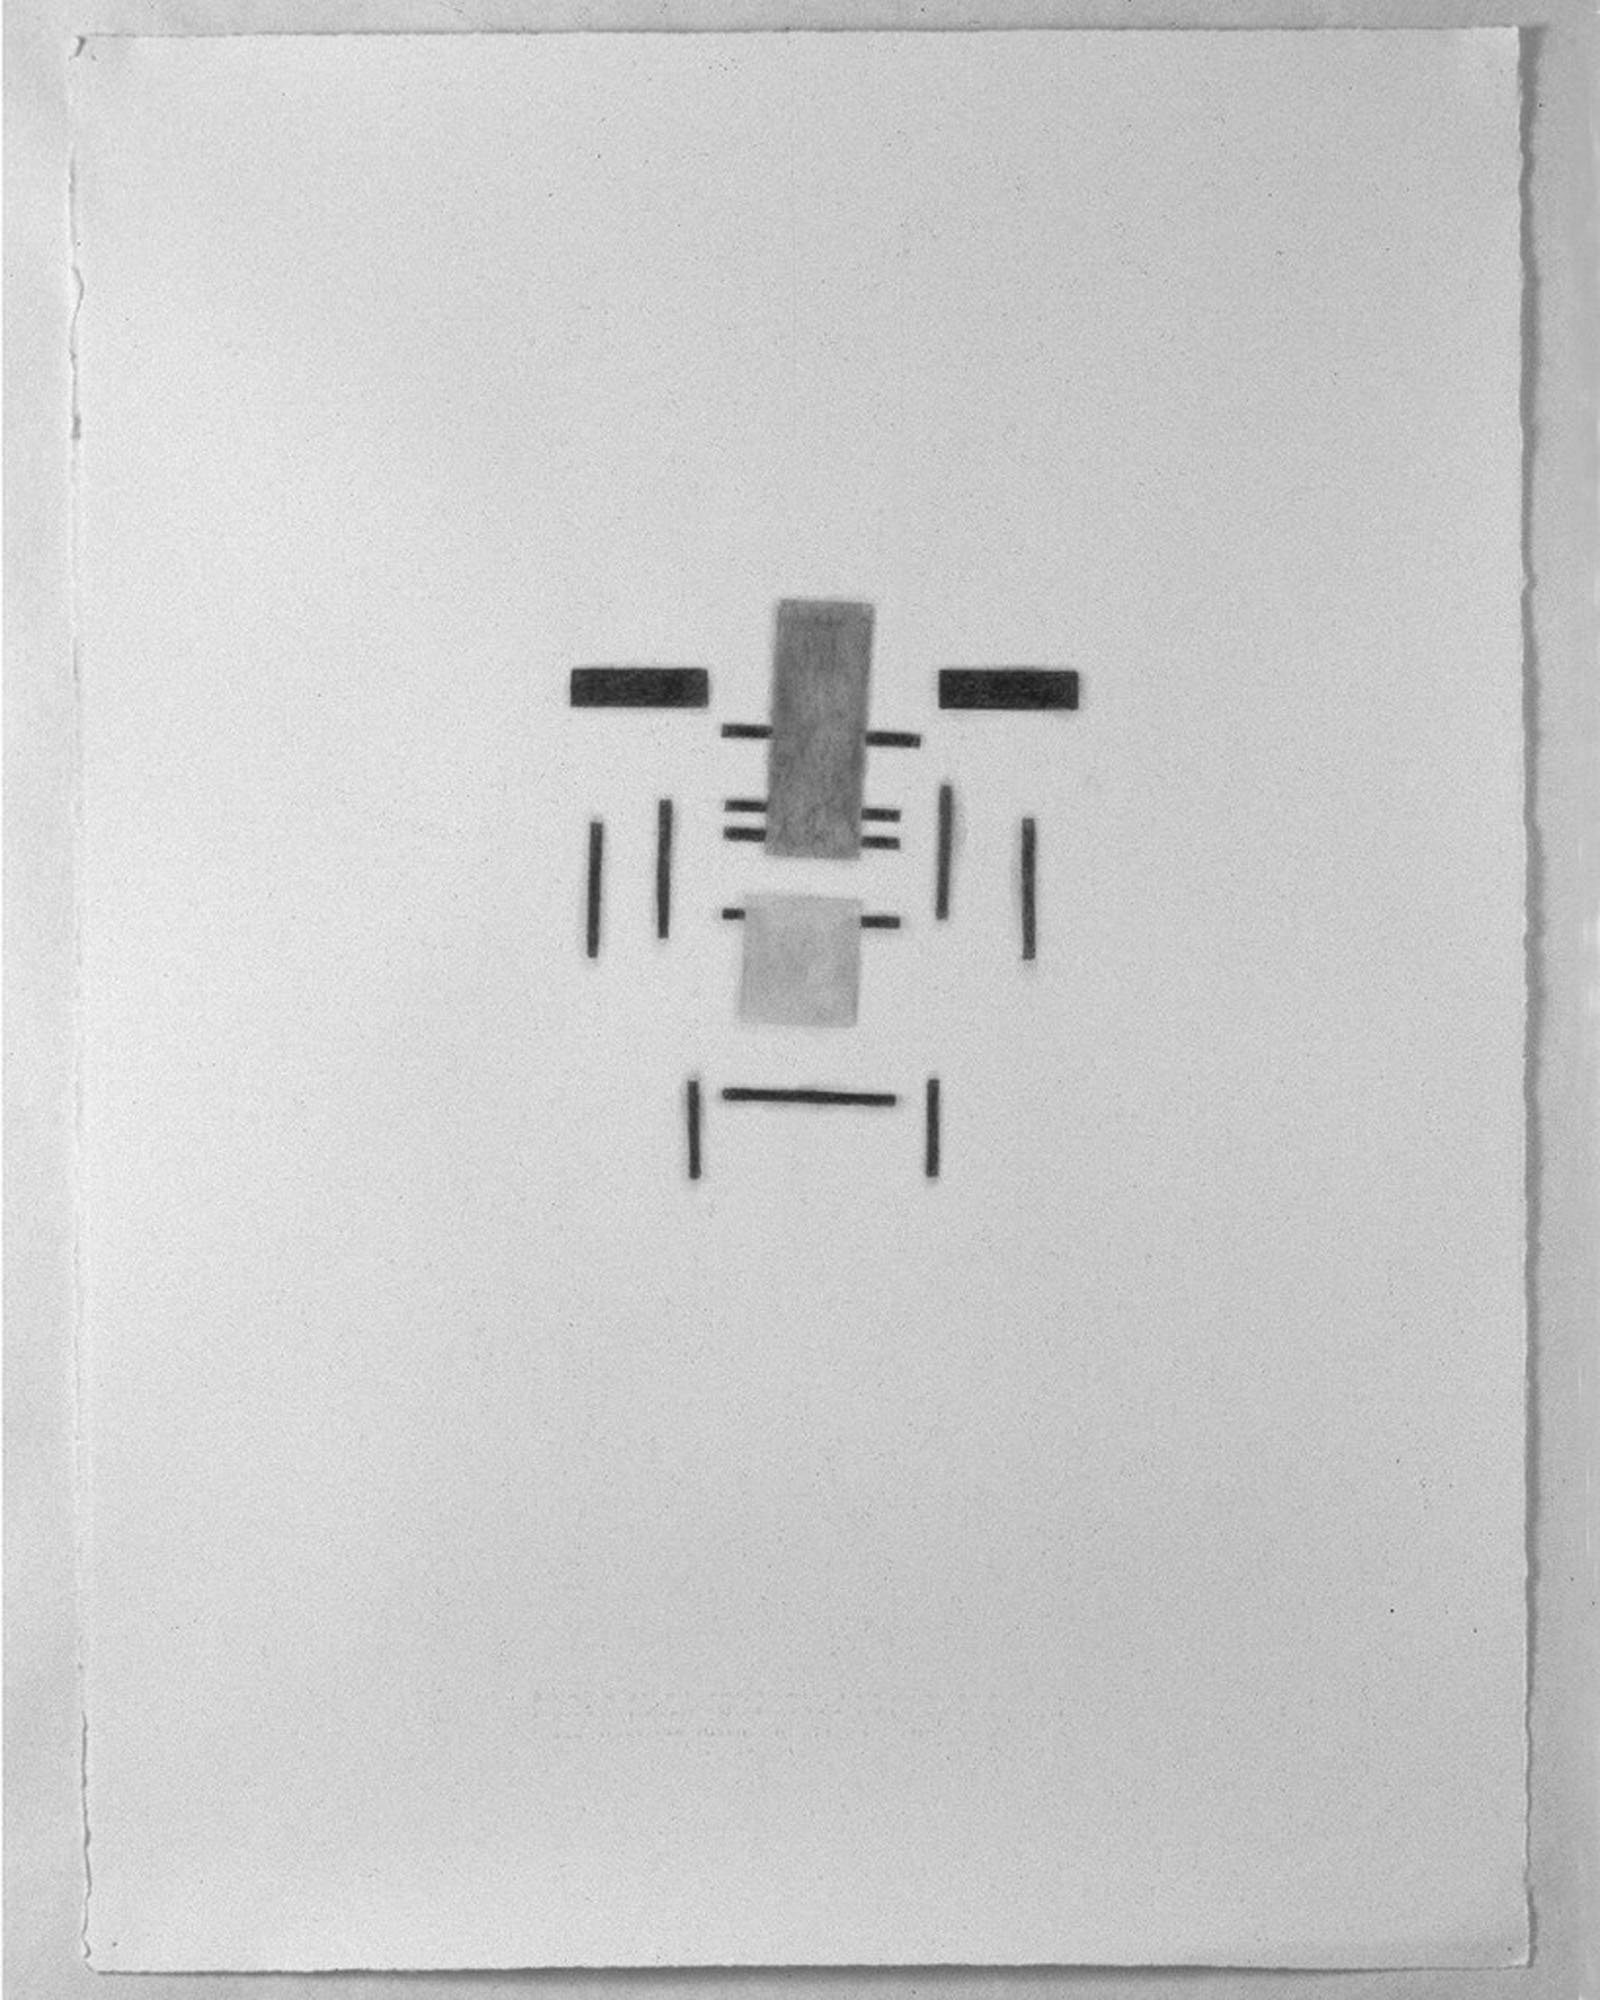   "Blauprint van Rietveld’s stoel ‘…den stuhl sich flochte."  (Blueprint of Rietveld’s Chair), 1997  Graphite pencil on paper,&nbsp;30”x 22” 